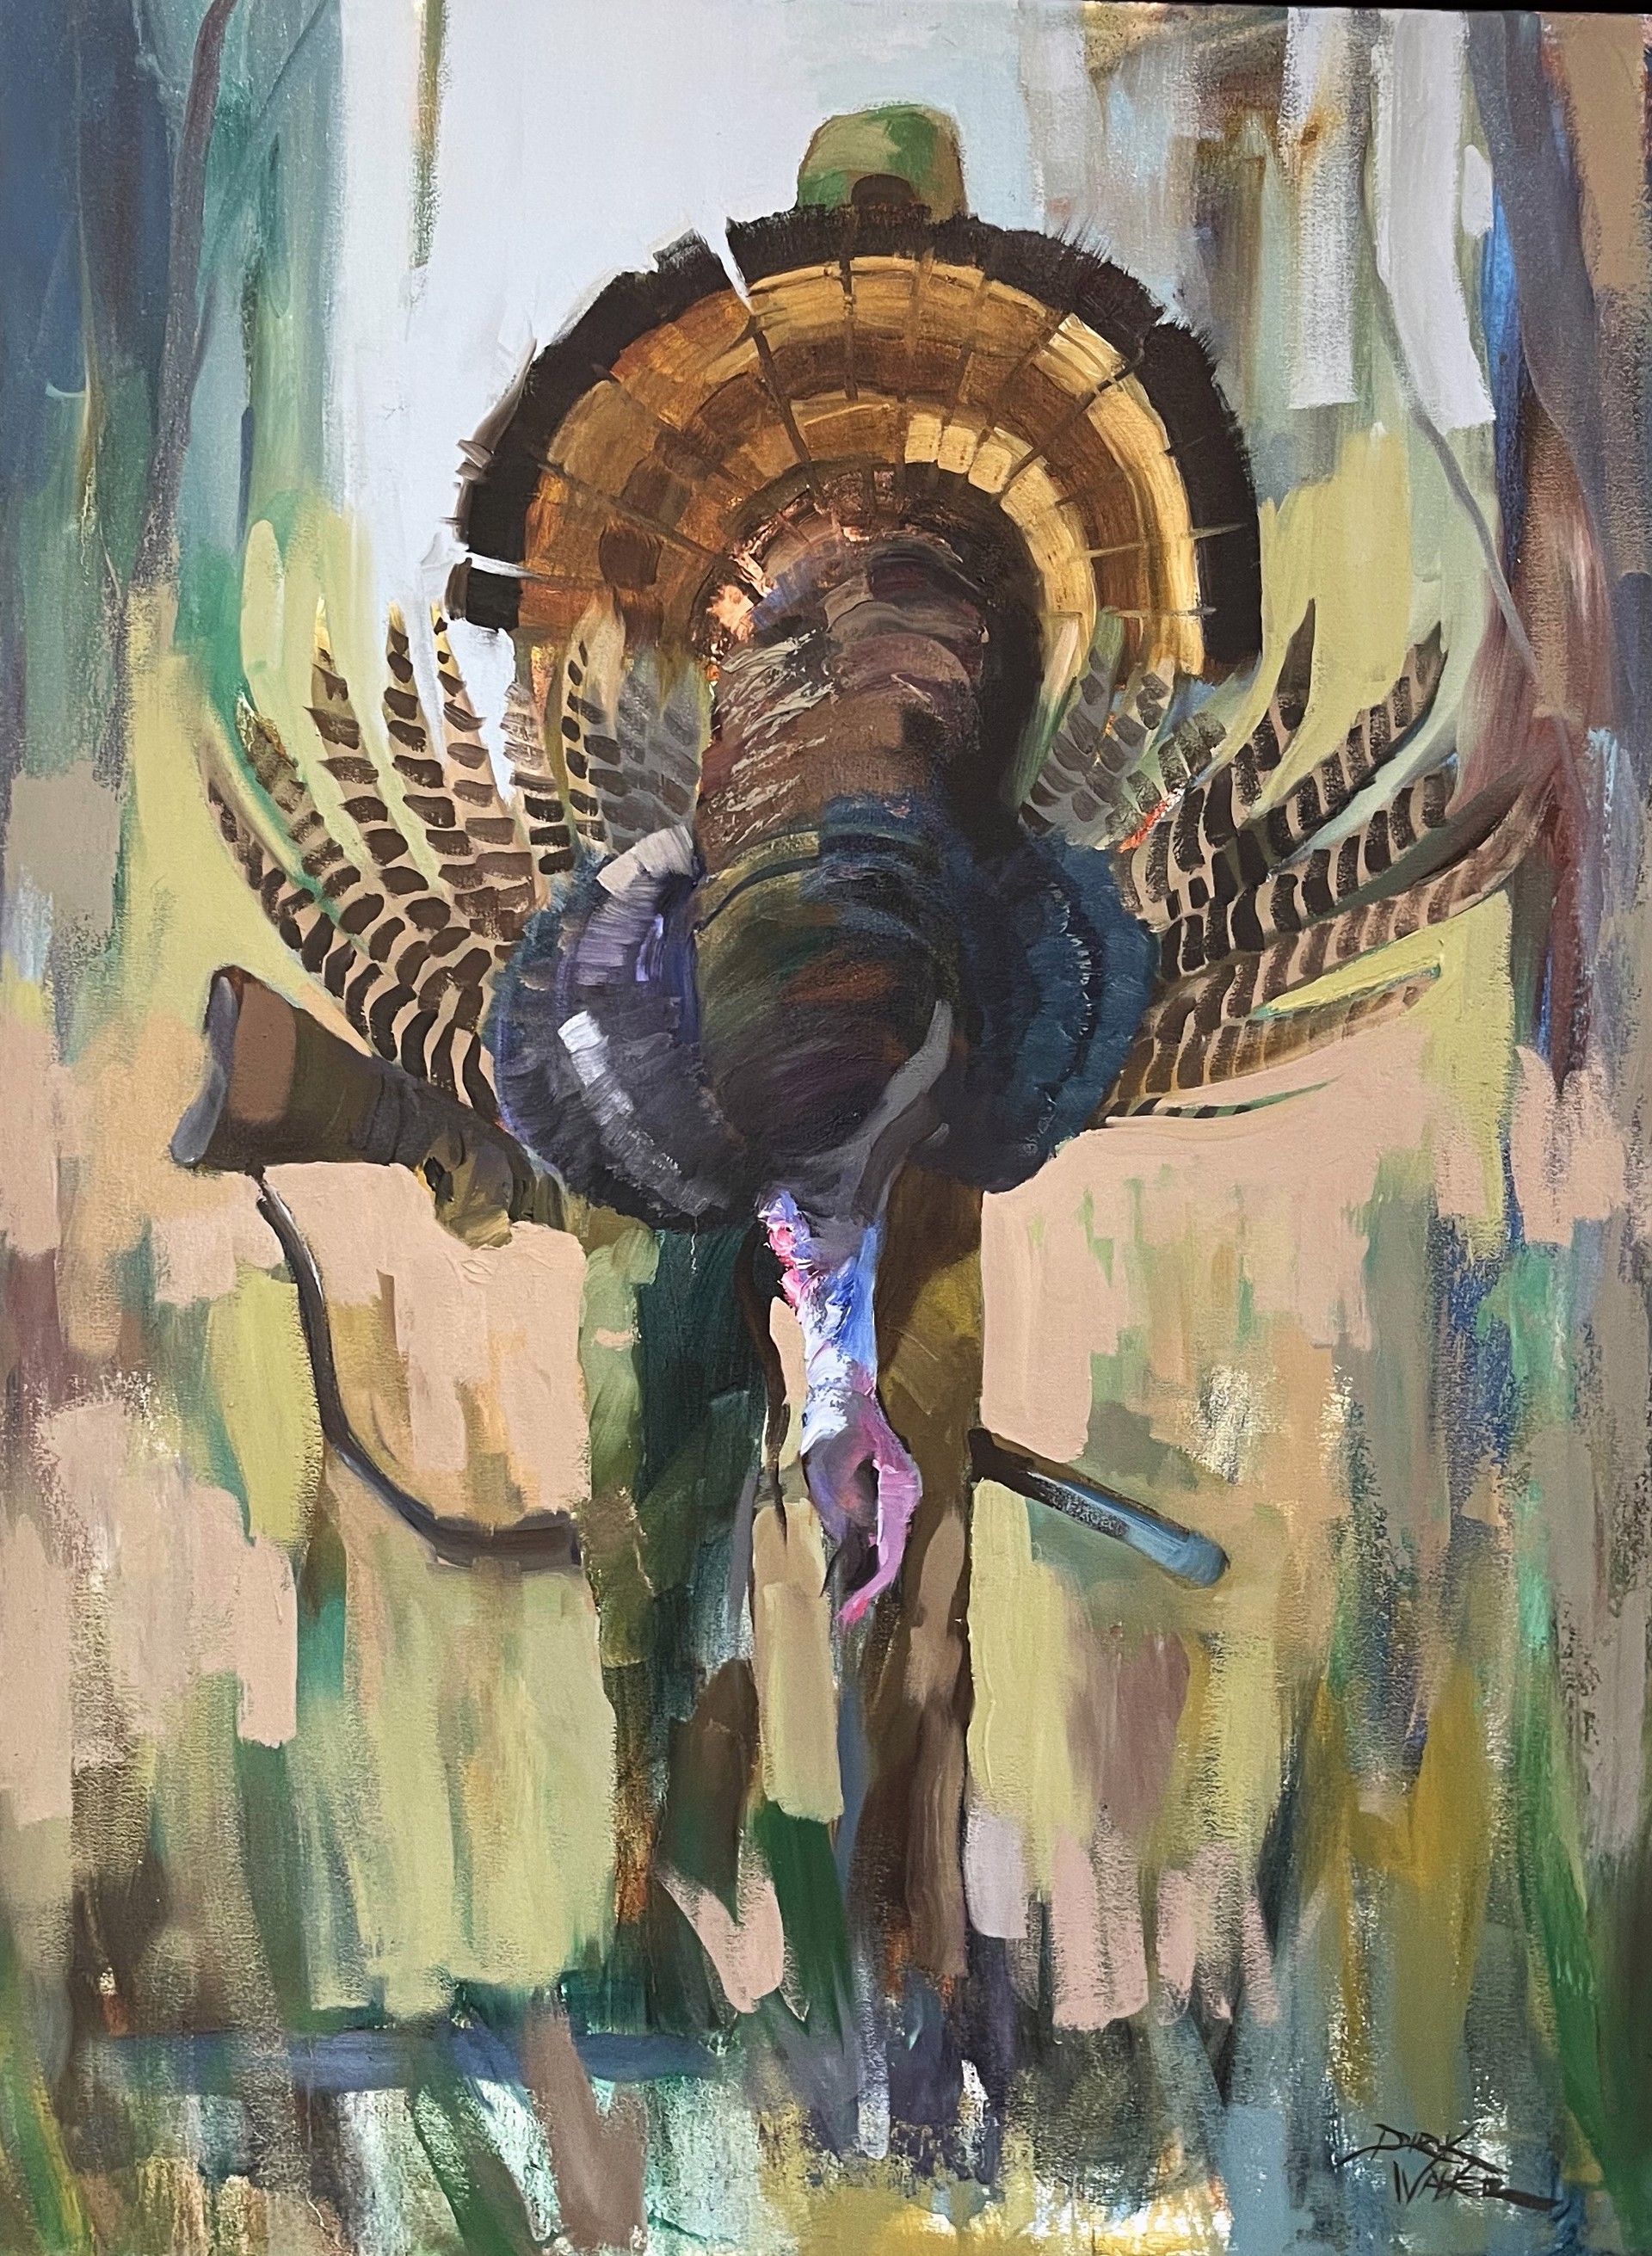 Early Spring Tom - The Turkey Hunter by Dirk Walker